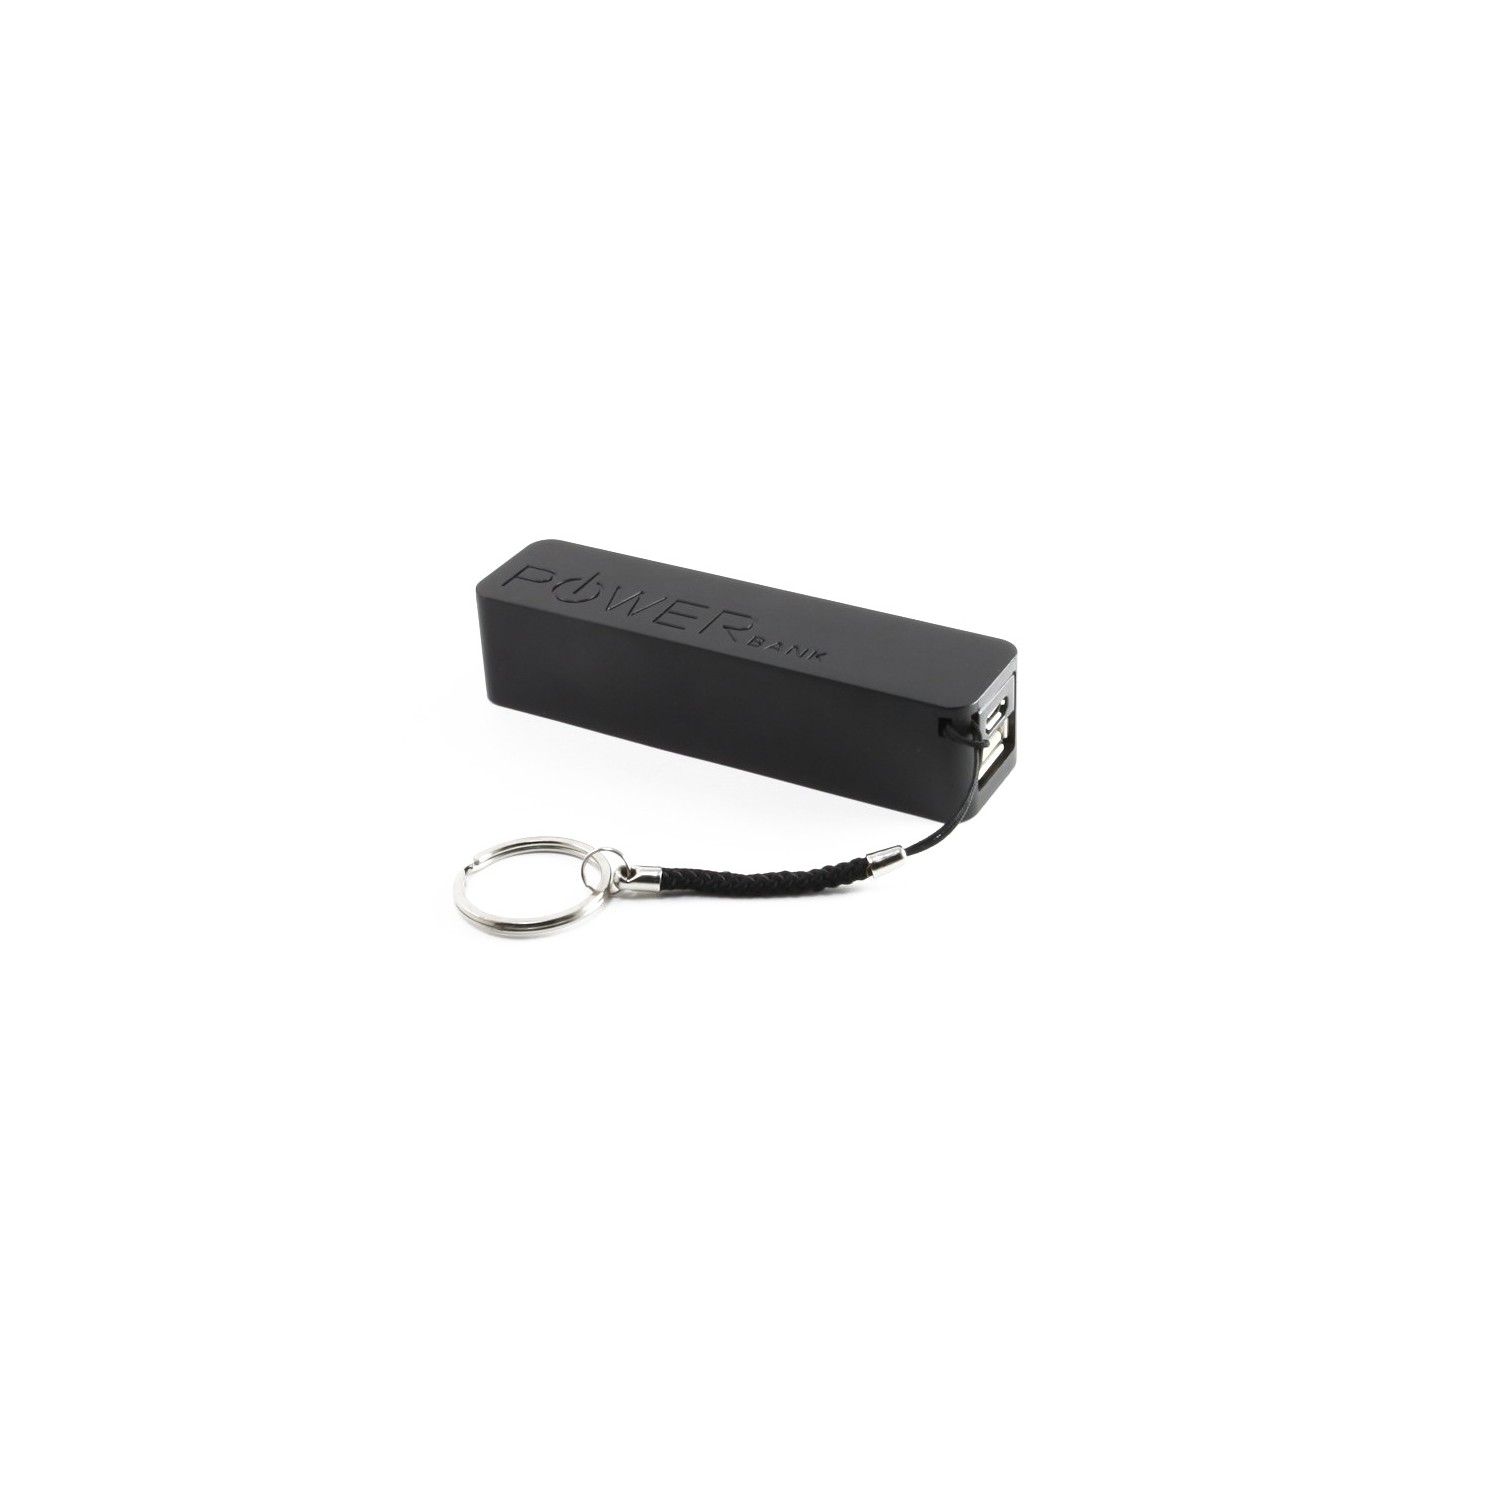 axGear 2600mAH Mini Backup External Battery Portable Cable Charger USB Power Bank BK